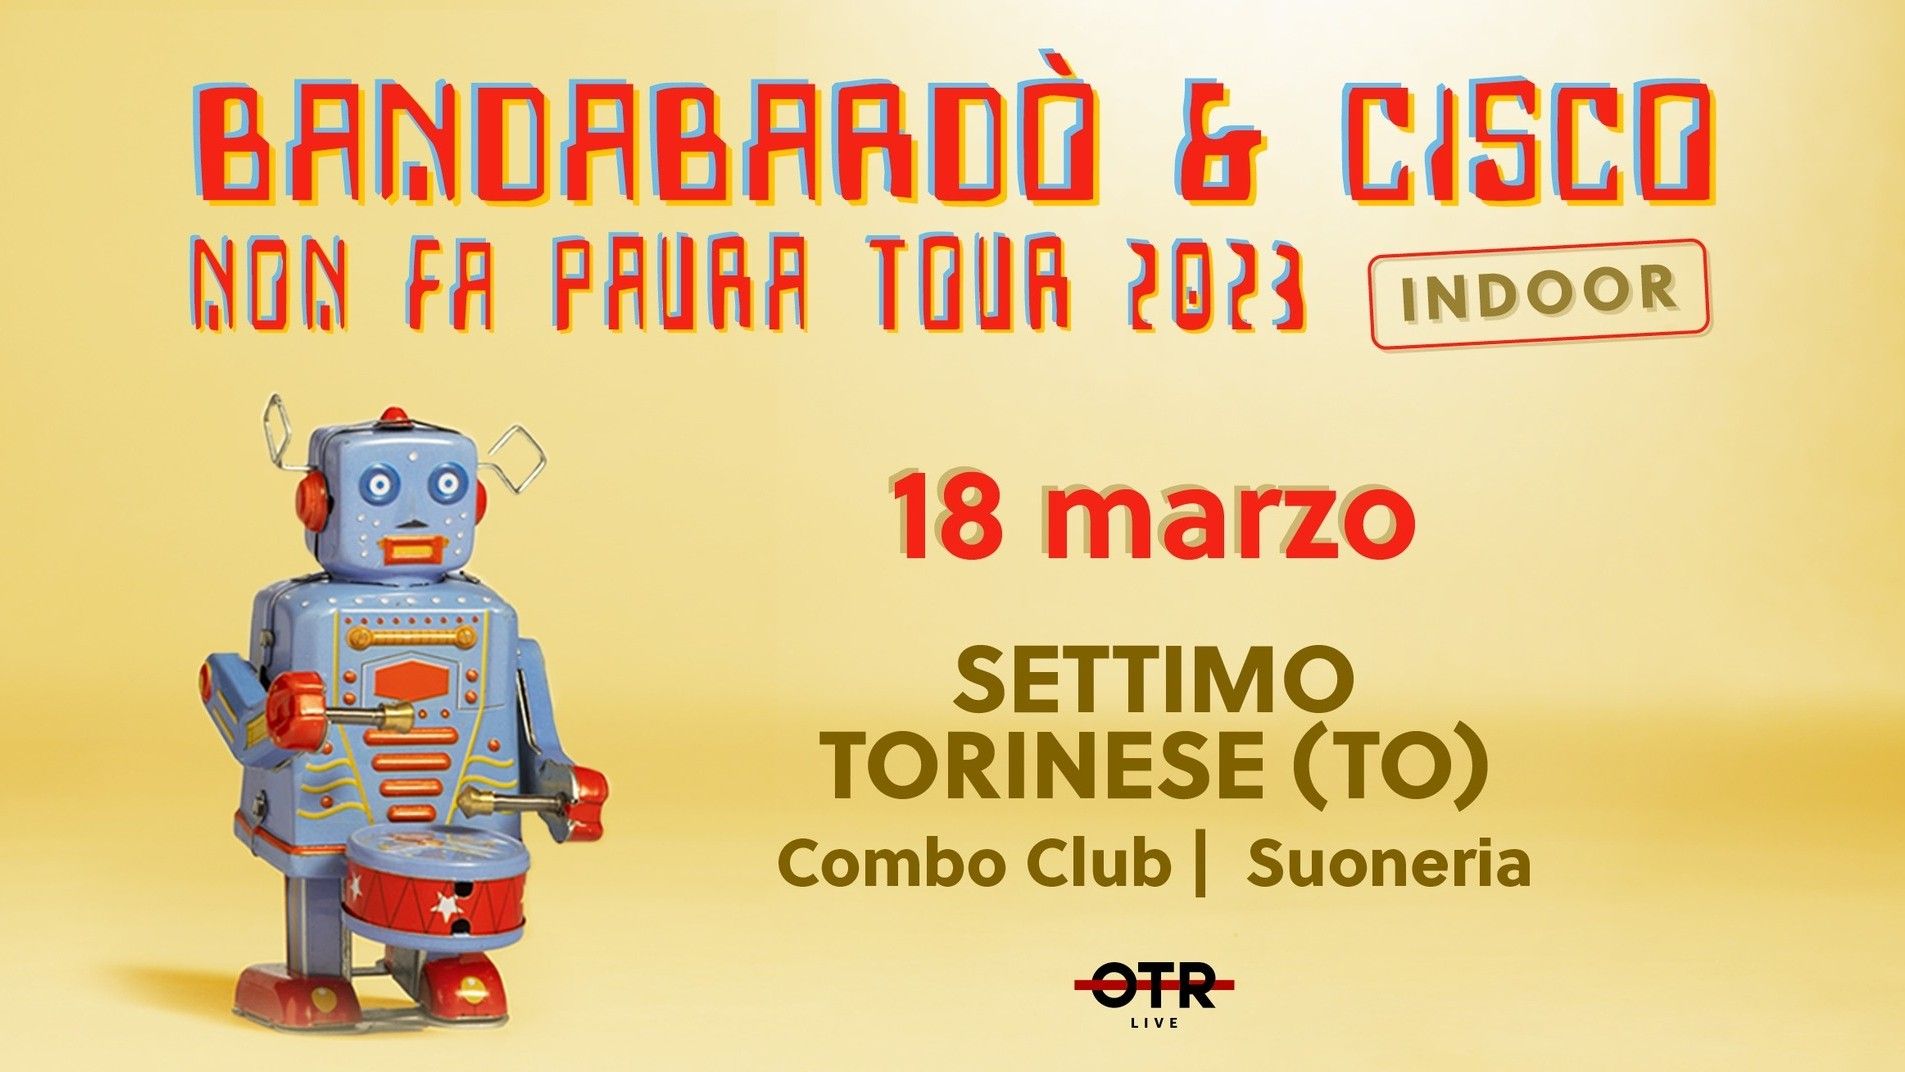 Bandabardò & Cisco - "Non fa paura tour 2023"